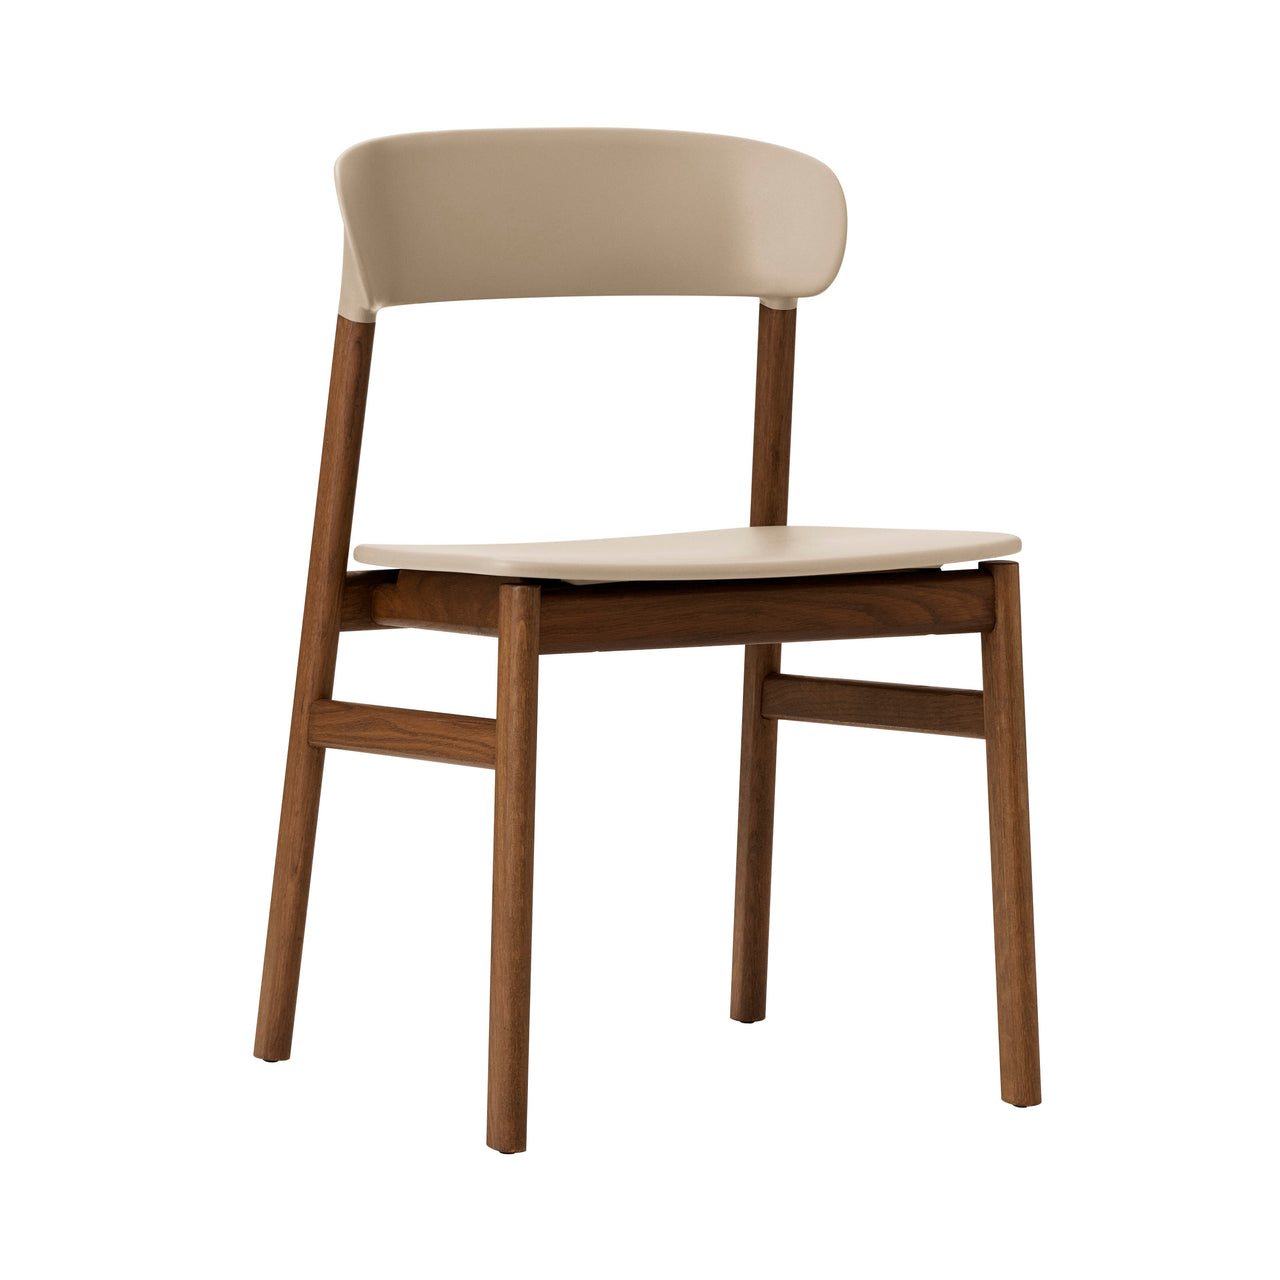 Herit Chair: Smoked Oak + Sand